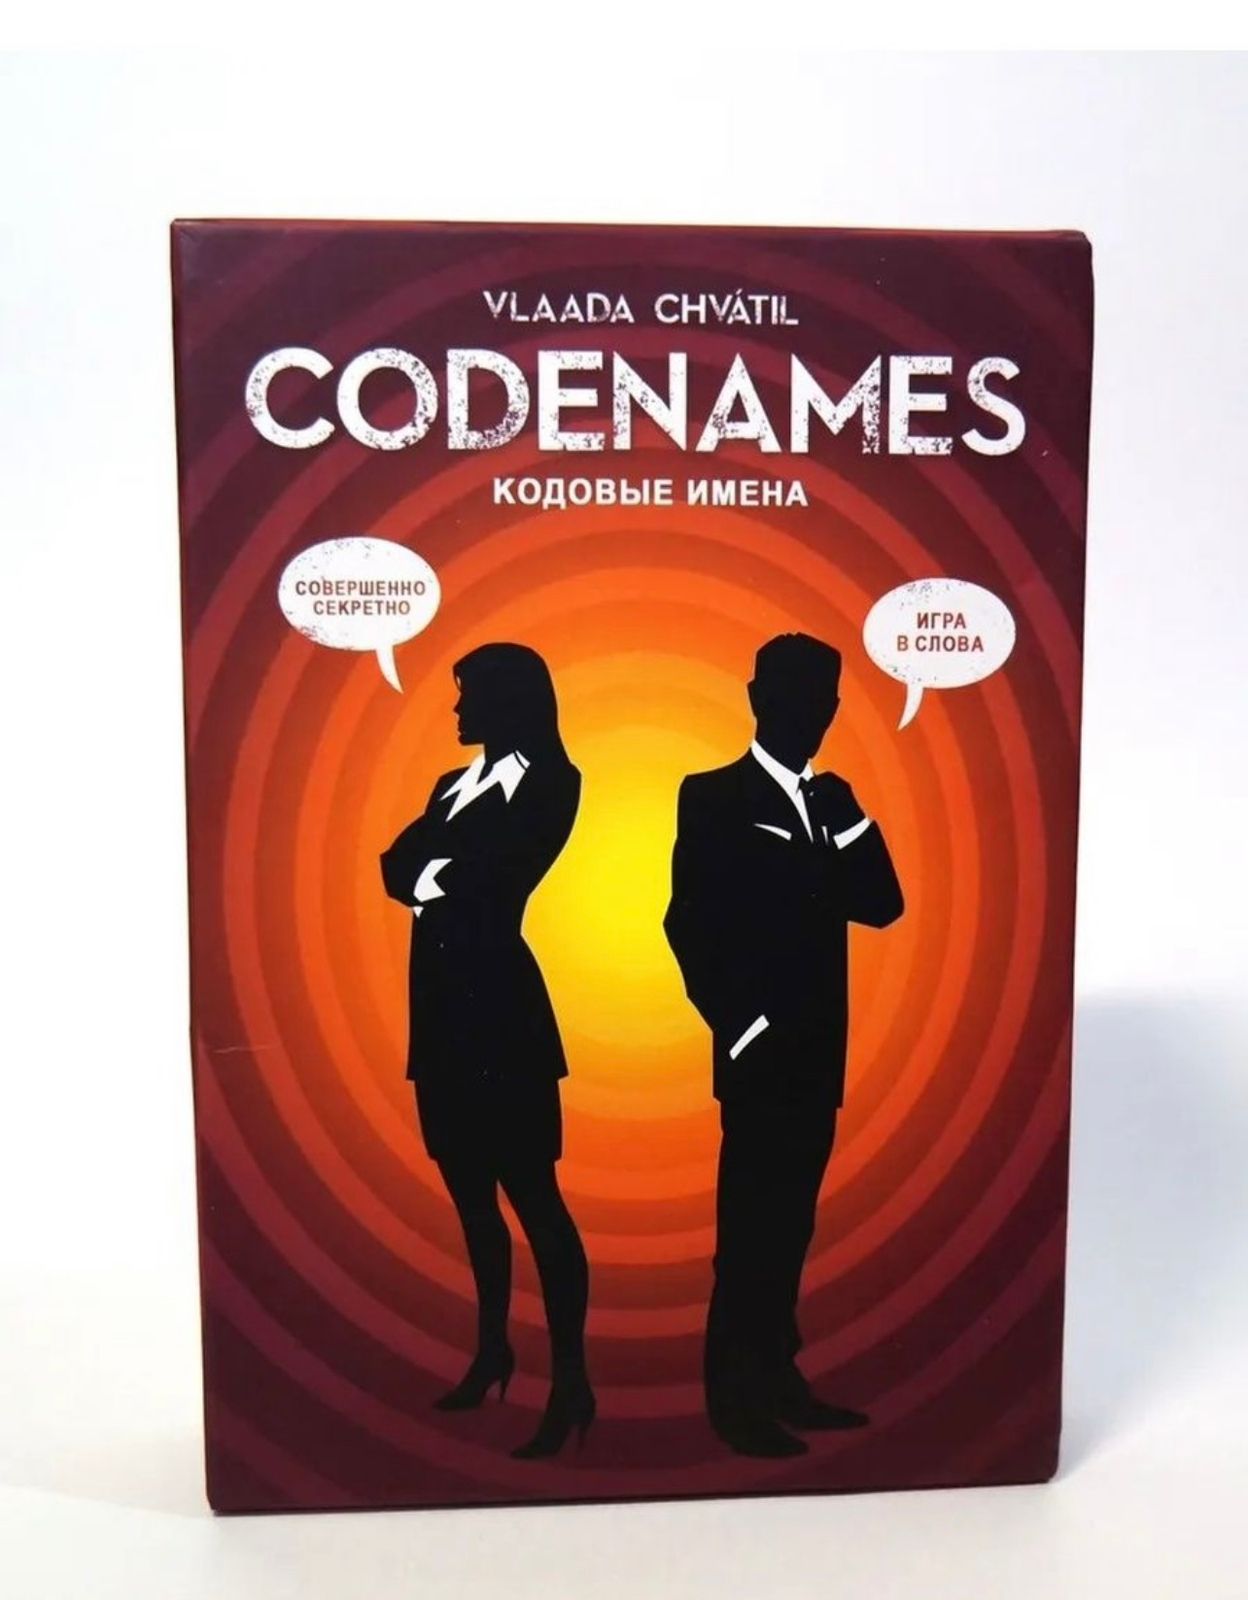 Code name game. Коднеймс игра. Codenames настольная игра. Кодовые имена (Codenames). Настольная игра кодовое слово код нэим.